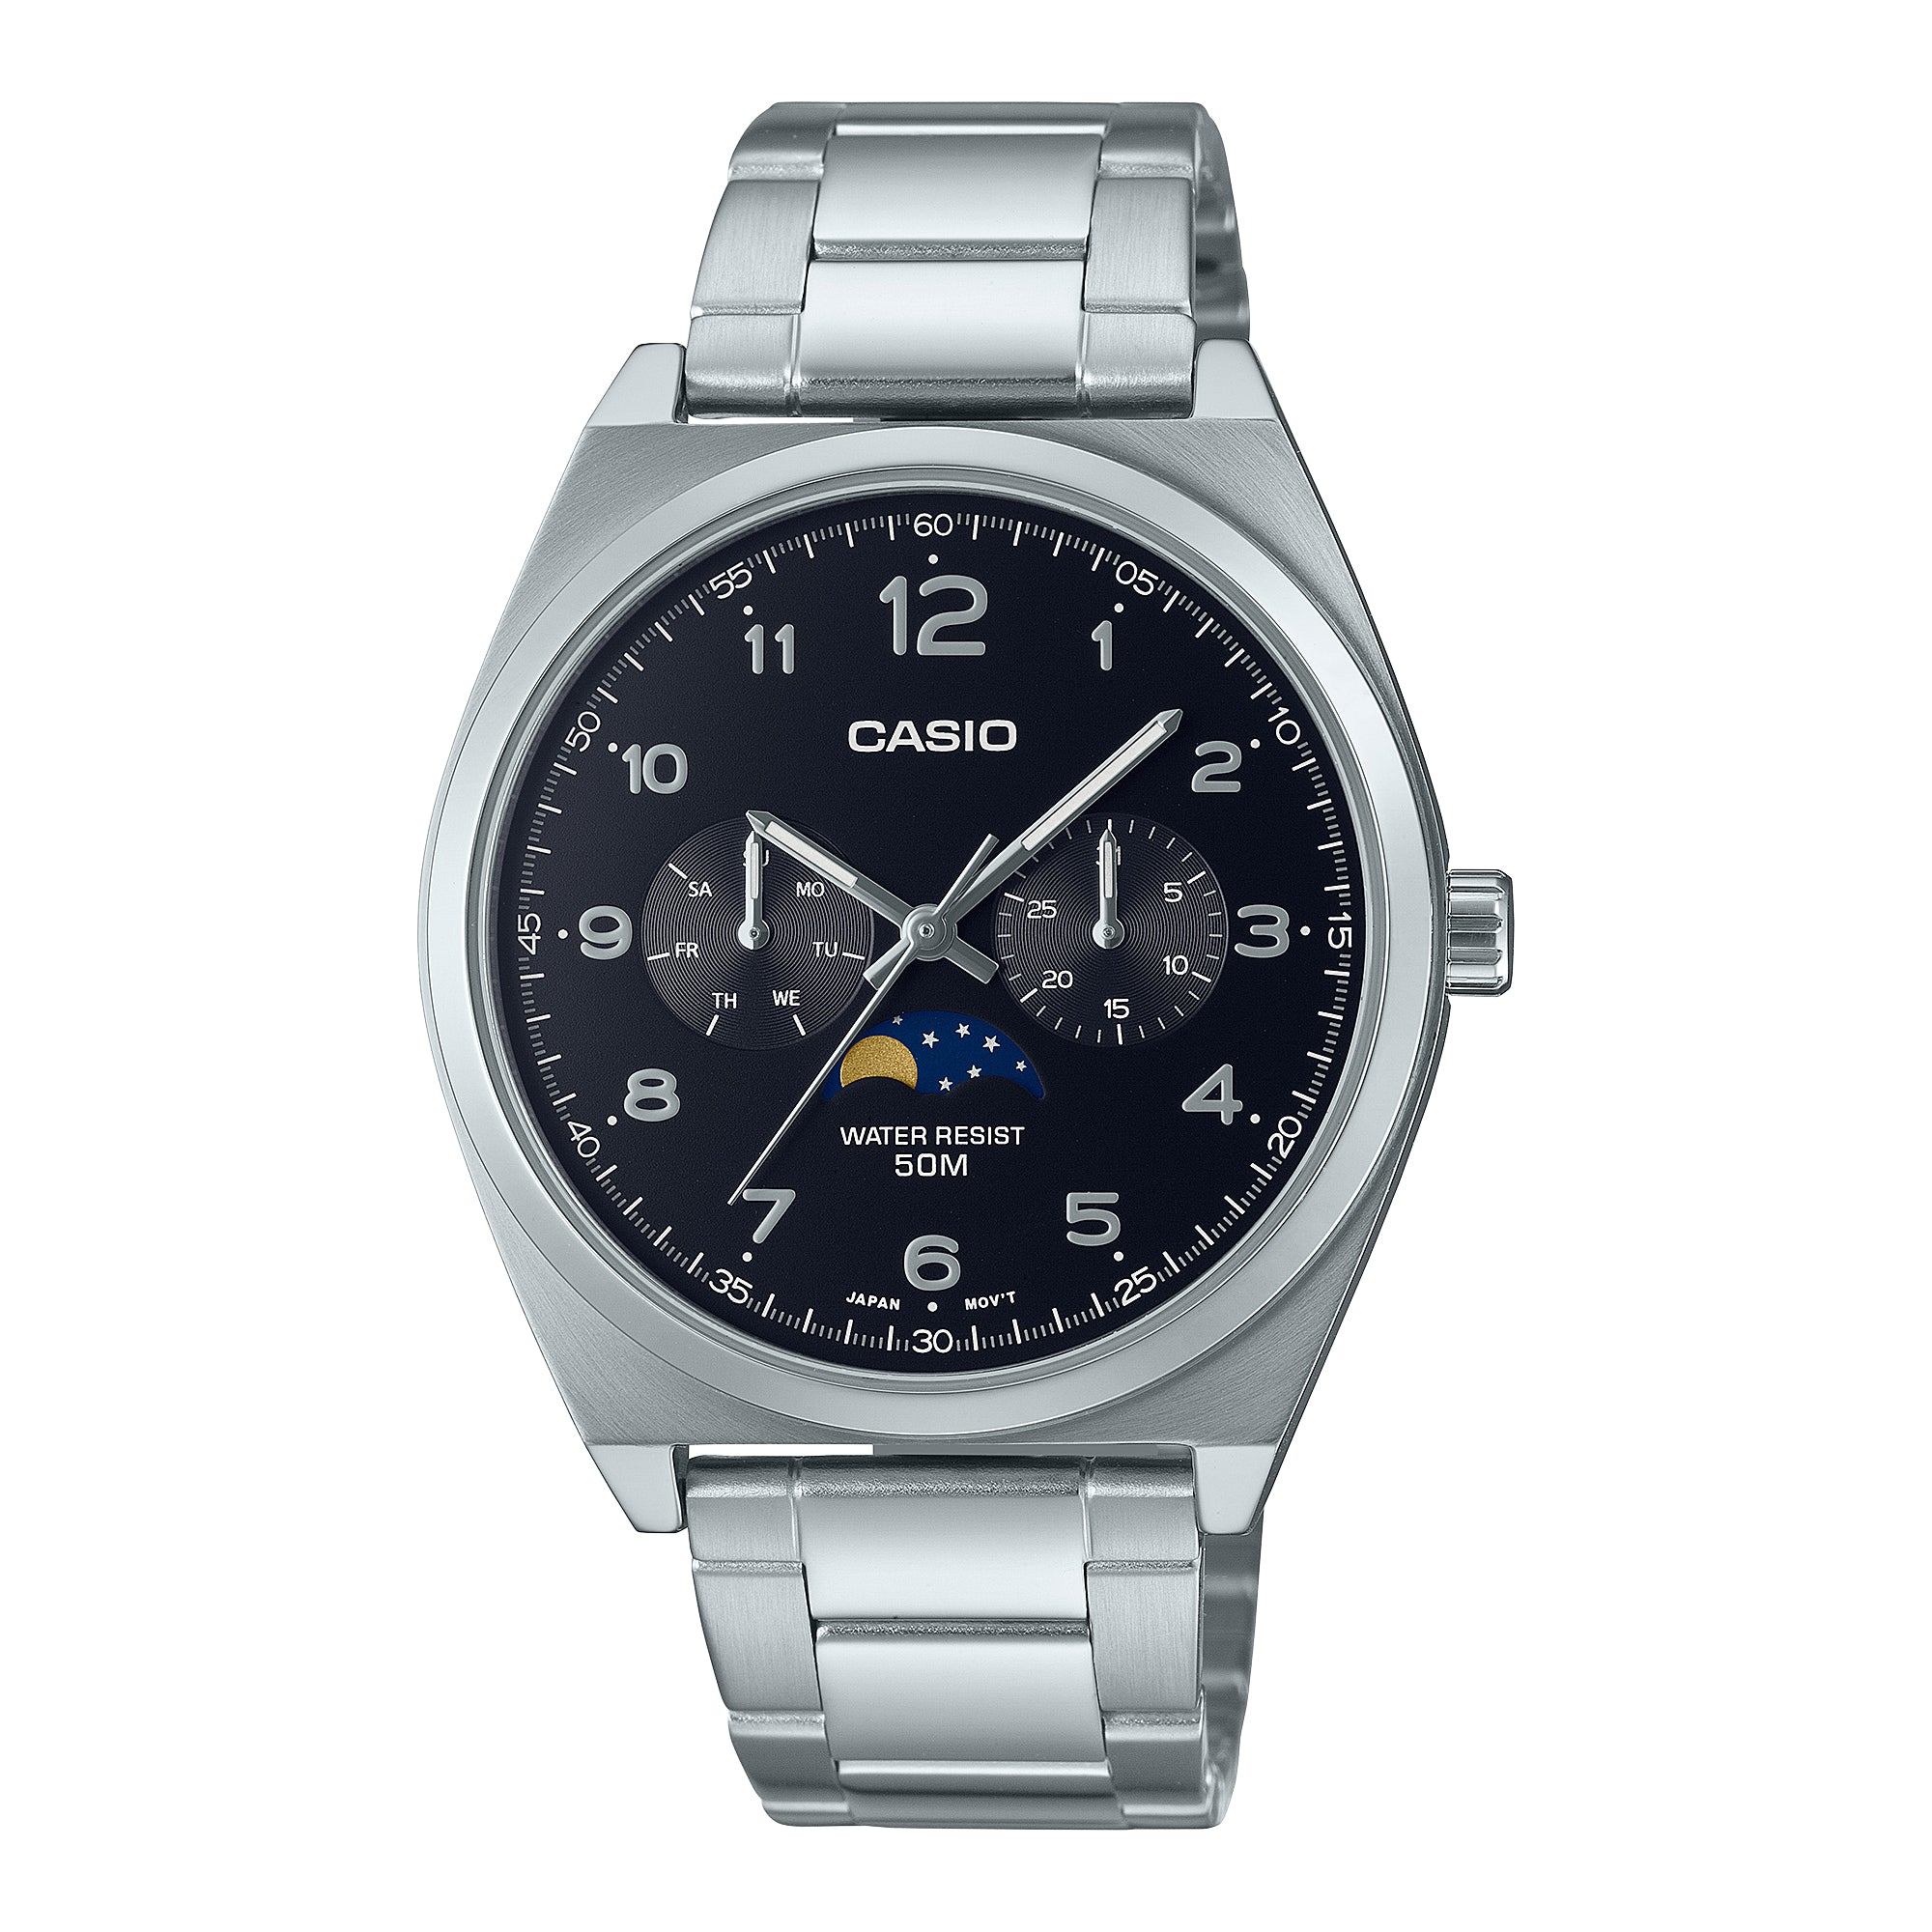 Casio Men's Analog Watch MTPM300D-1A MTP-M300D-1A